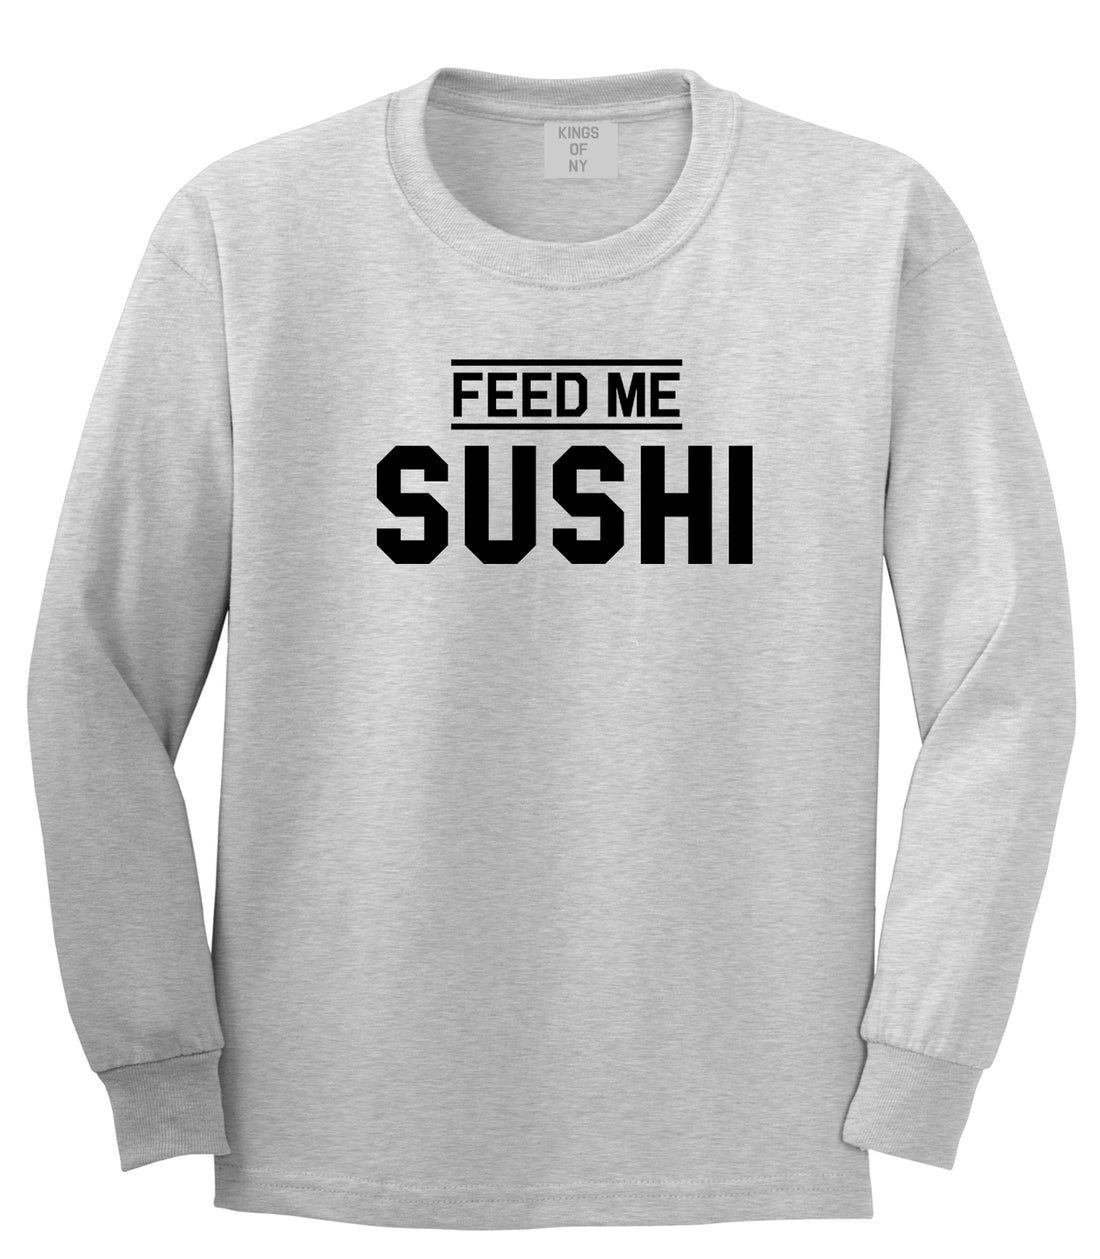 Feed Me Sushi Mens Grey Long Sleeve T-Shirt by KINGS OF NY